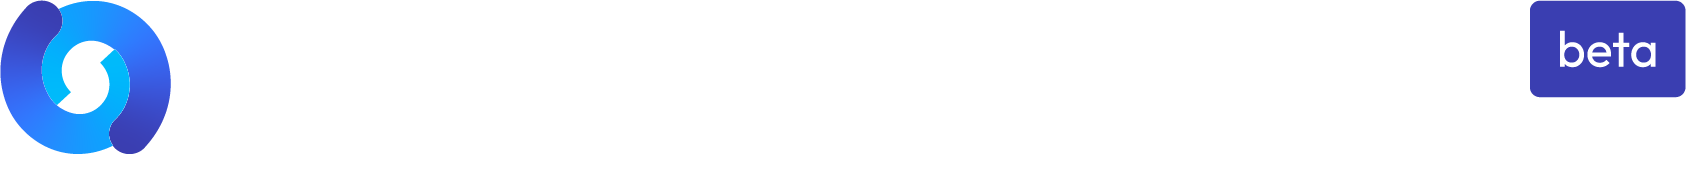 Scoutflo logo